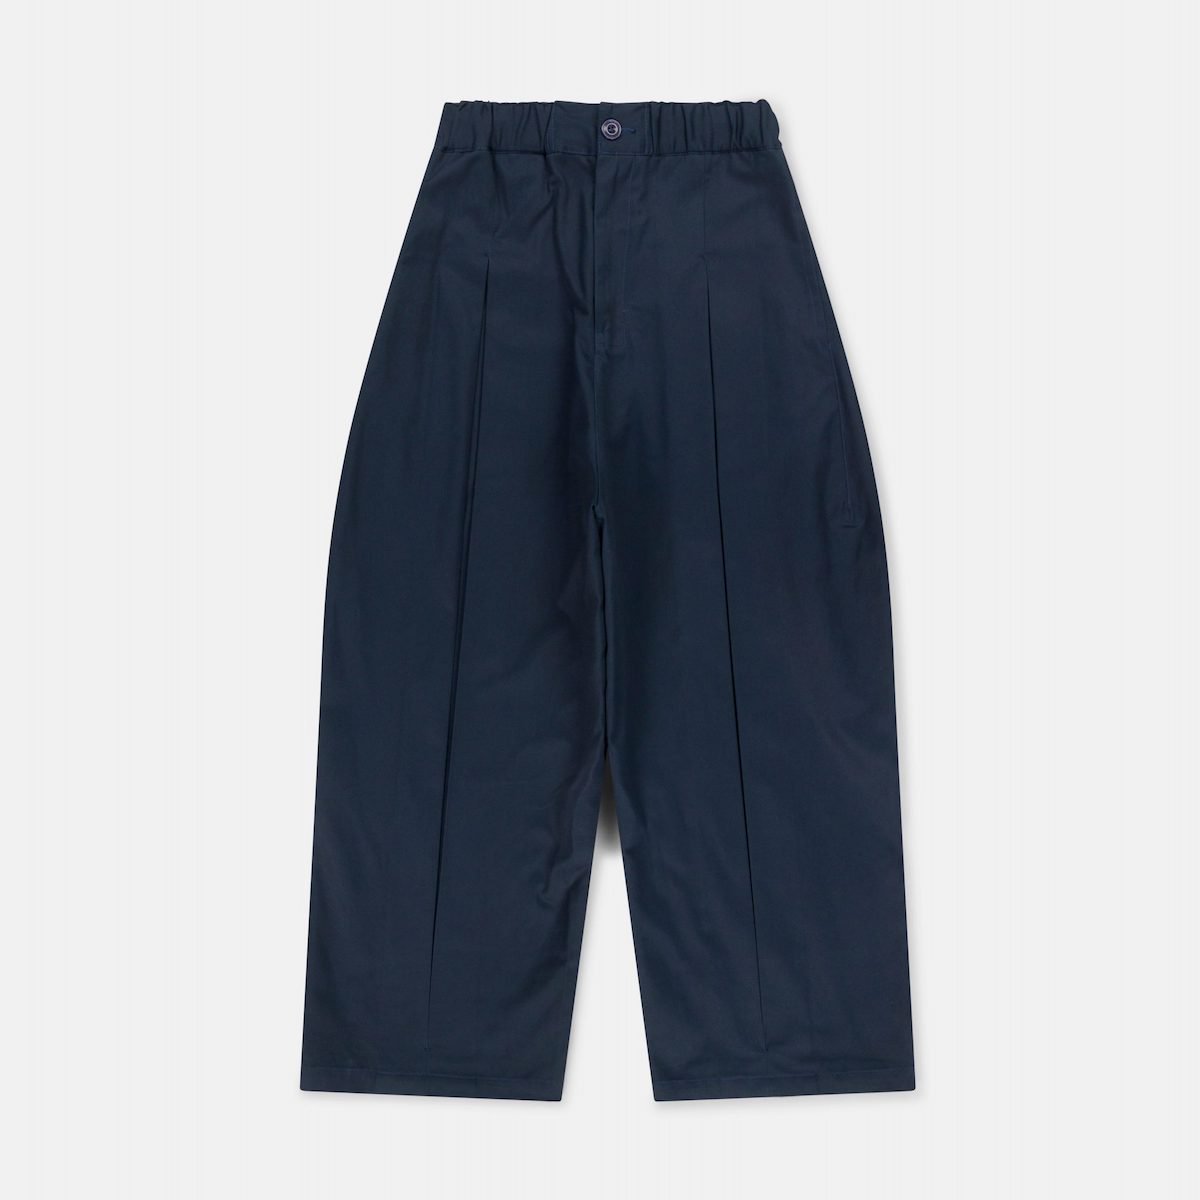 sagenation box pleats trouser サイズ S/Mdairiku